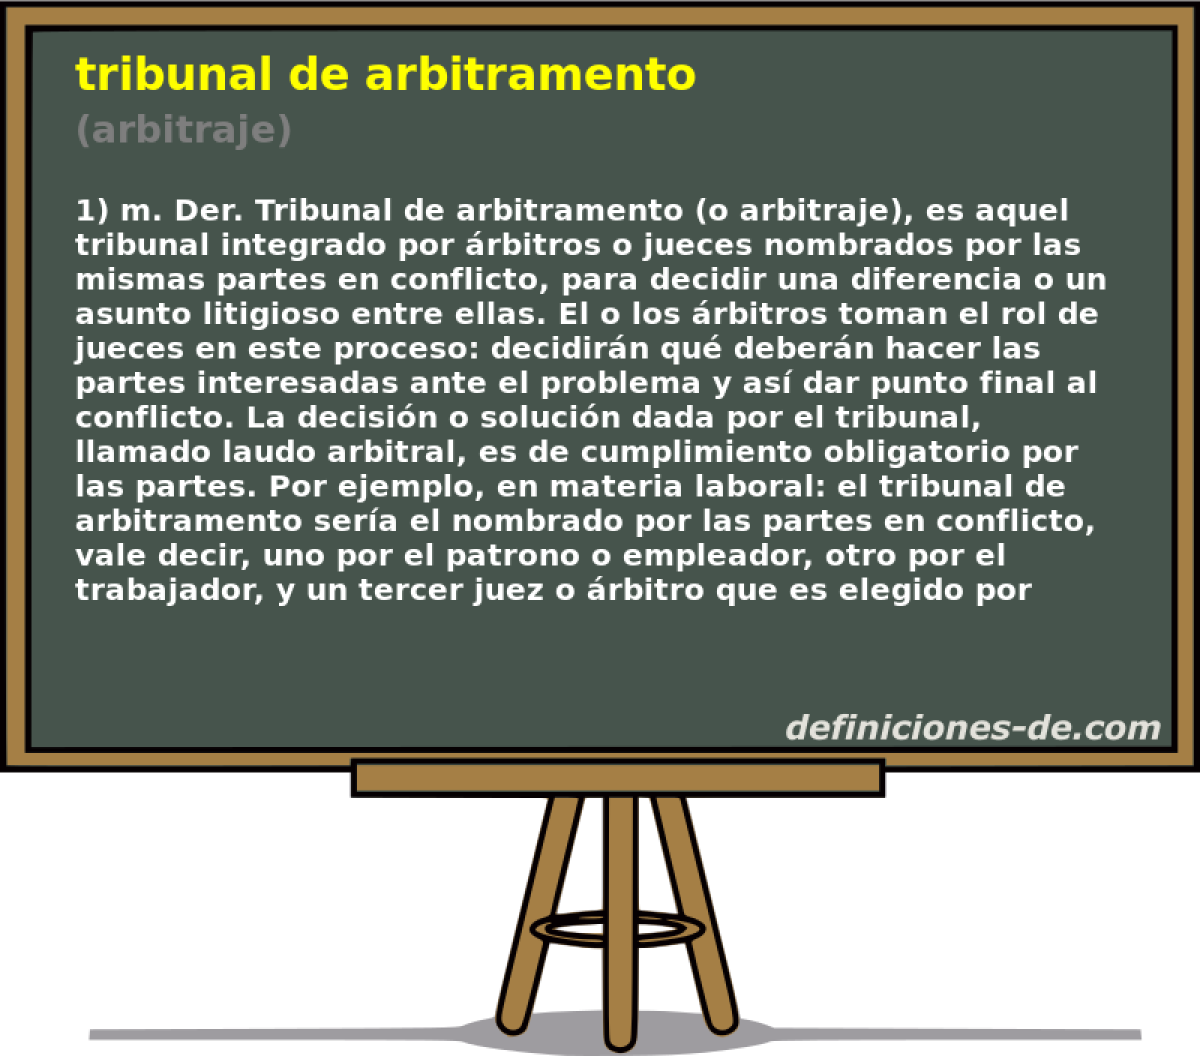 tribunal de arbitramento (arbitraje)